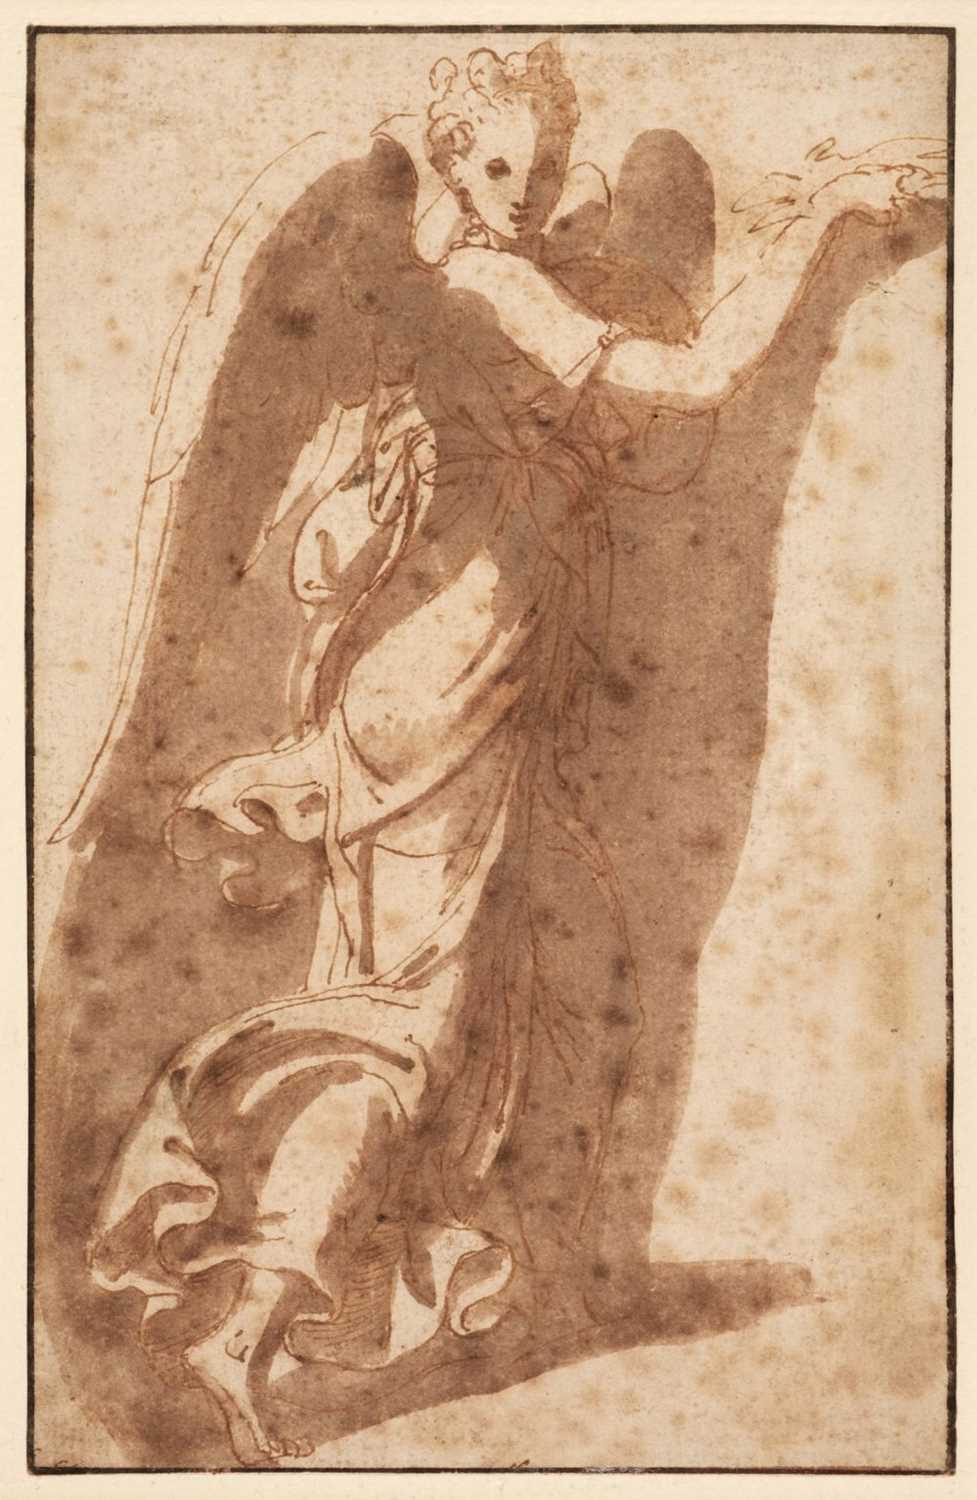 9 - India (Bernardino, Verona 1528-1590, attributed), Striding Angel. pen and ink, brush and wash